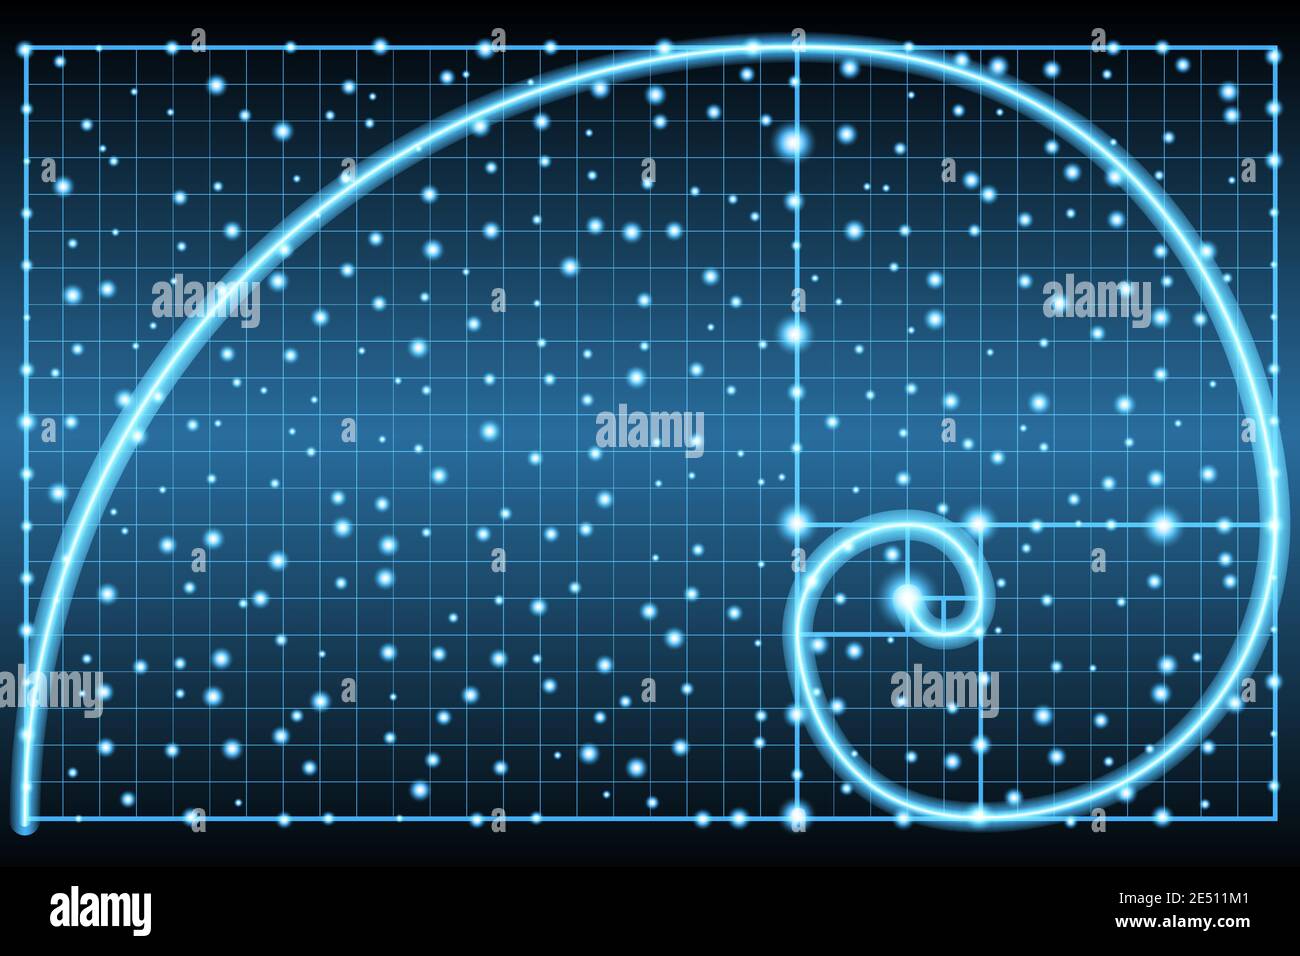 Glowing fibonacci spiral or golden ratio symbol on dark background Stock Vector